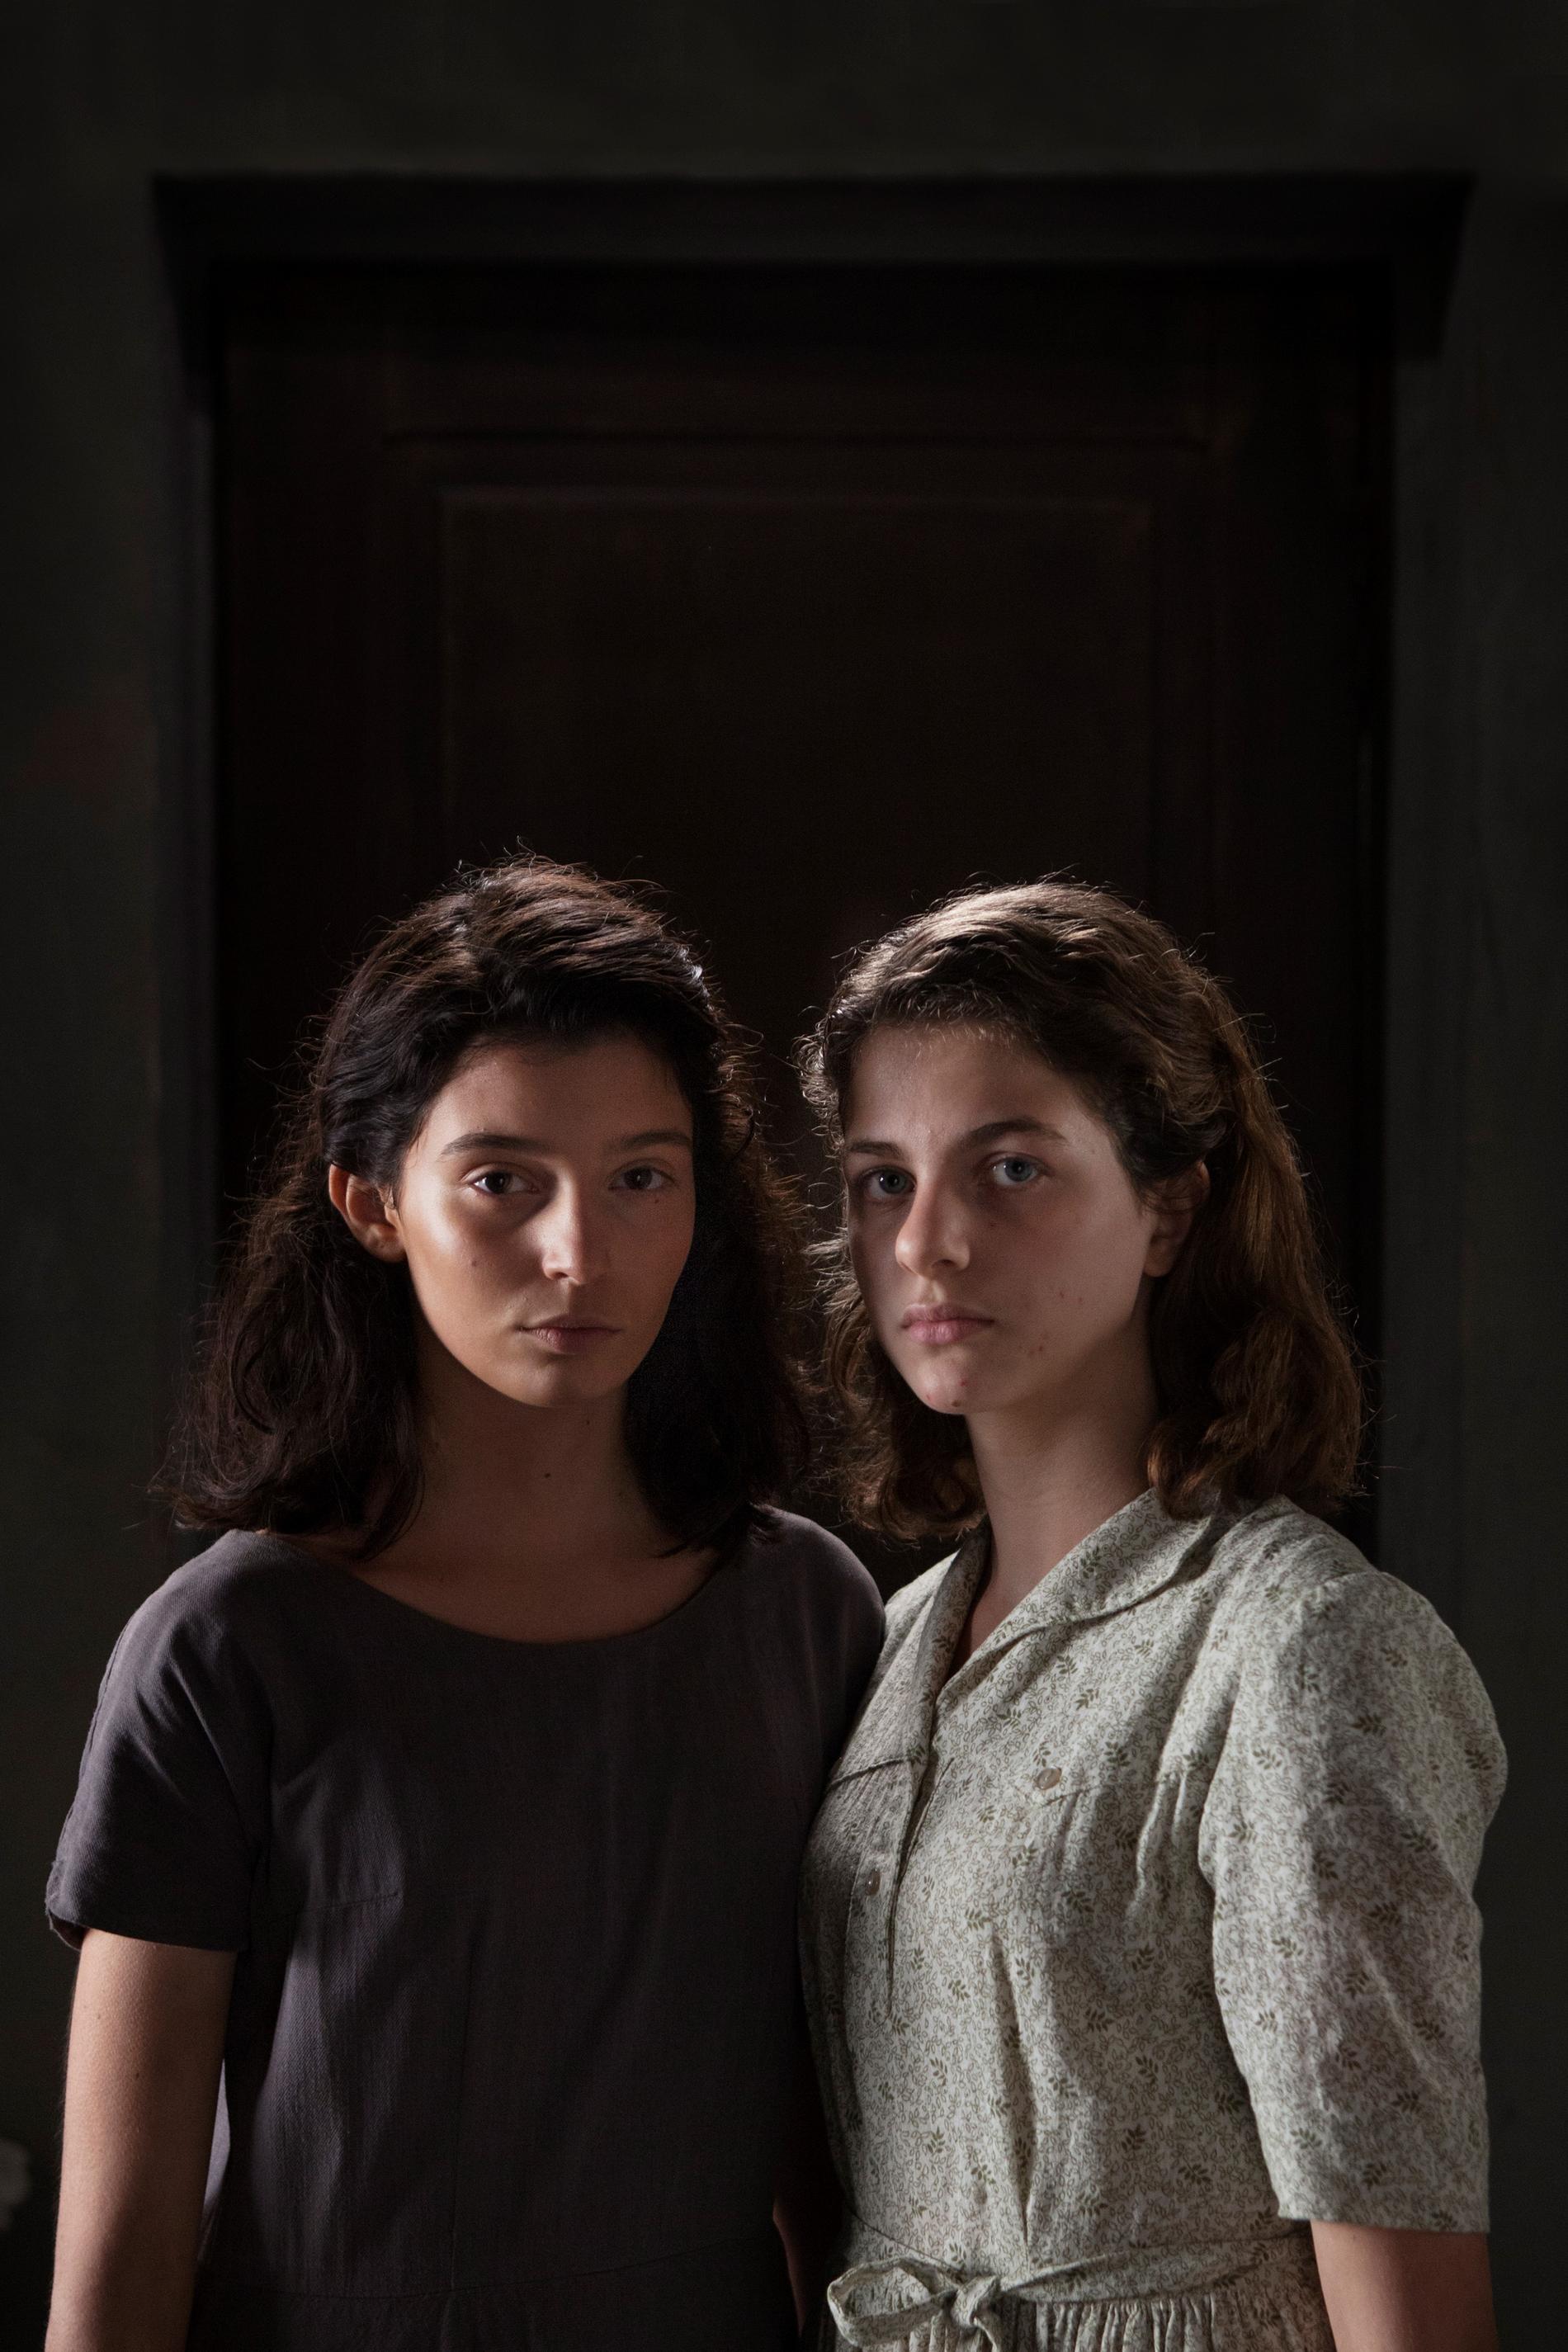 Gaia Girace (Lila) och Margherita Mazzucco (Elena) i ”My brilliant friend”.